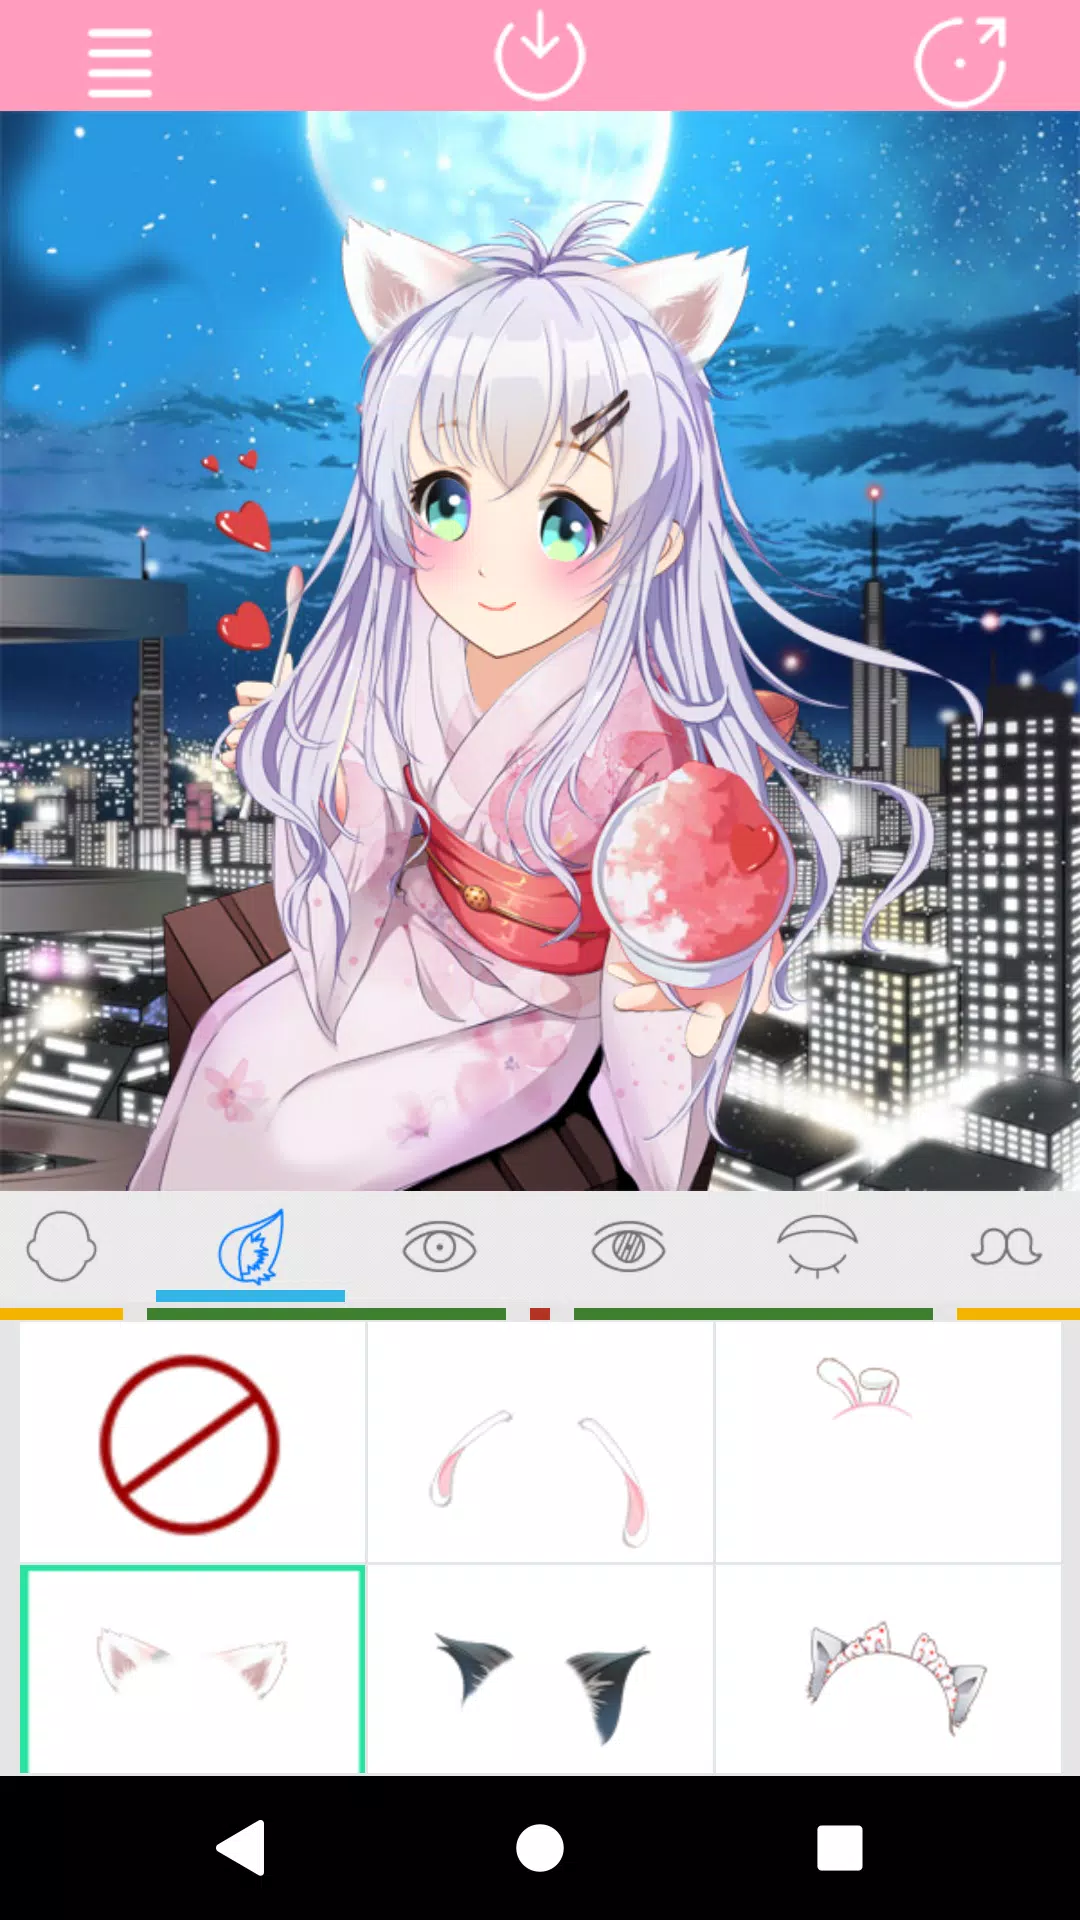 Kawaii Animes APK para Android - Download